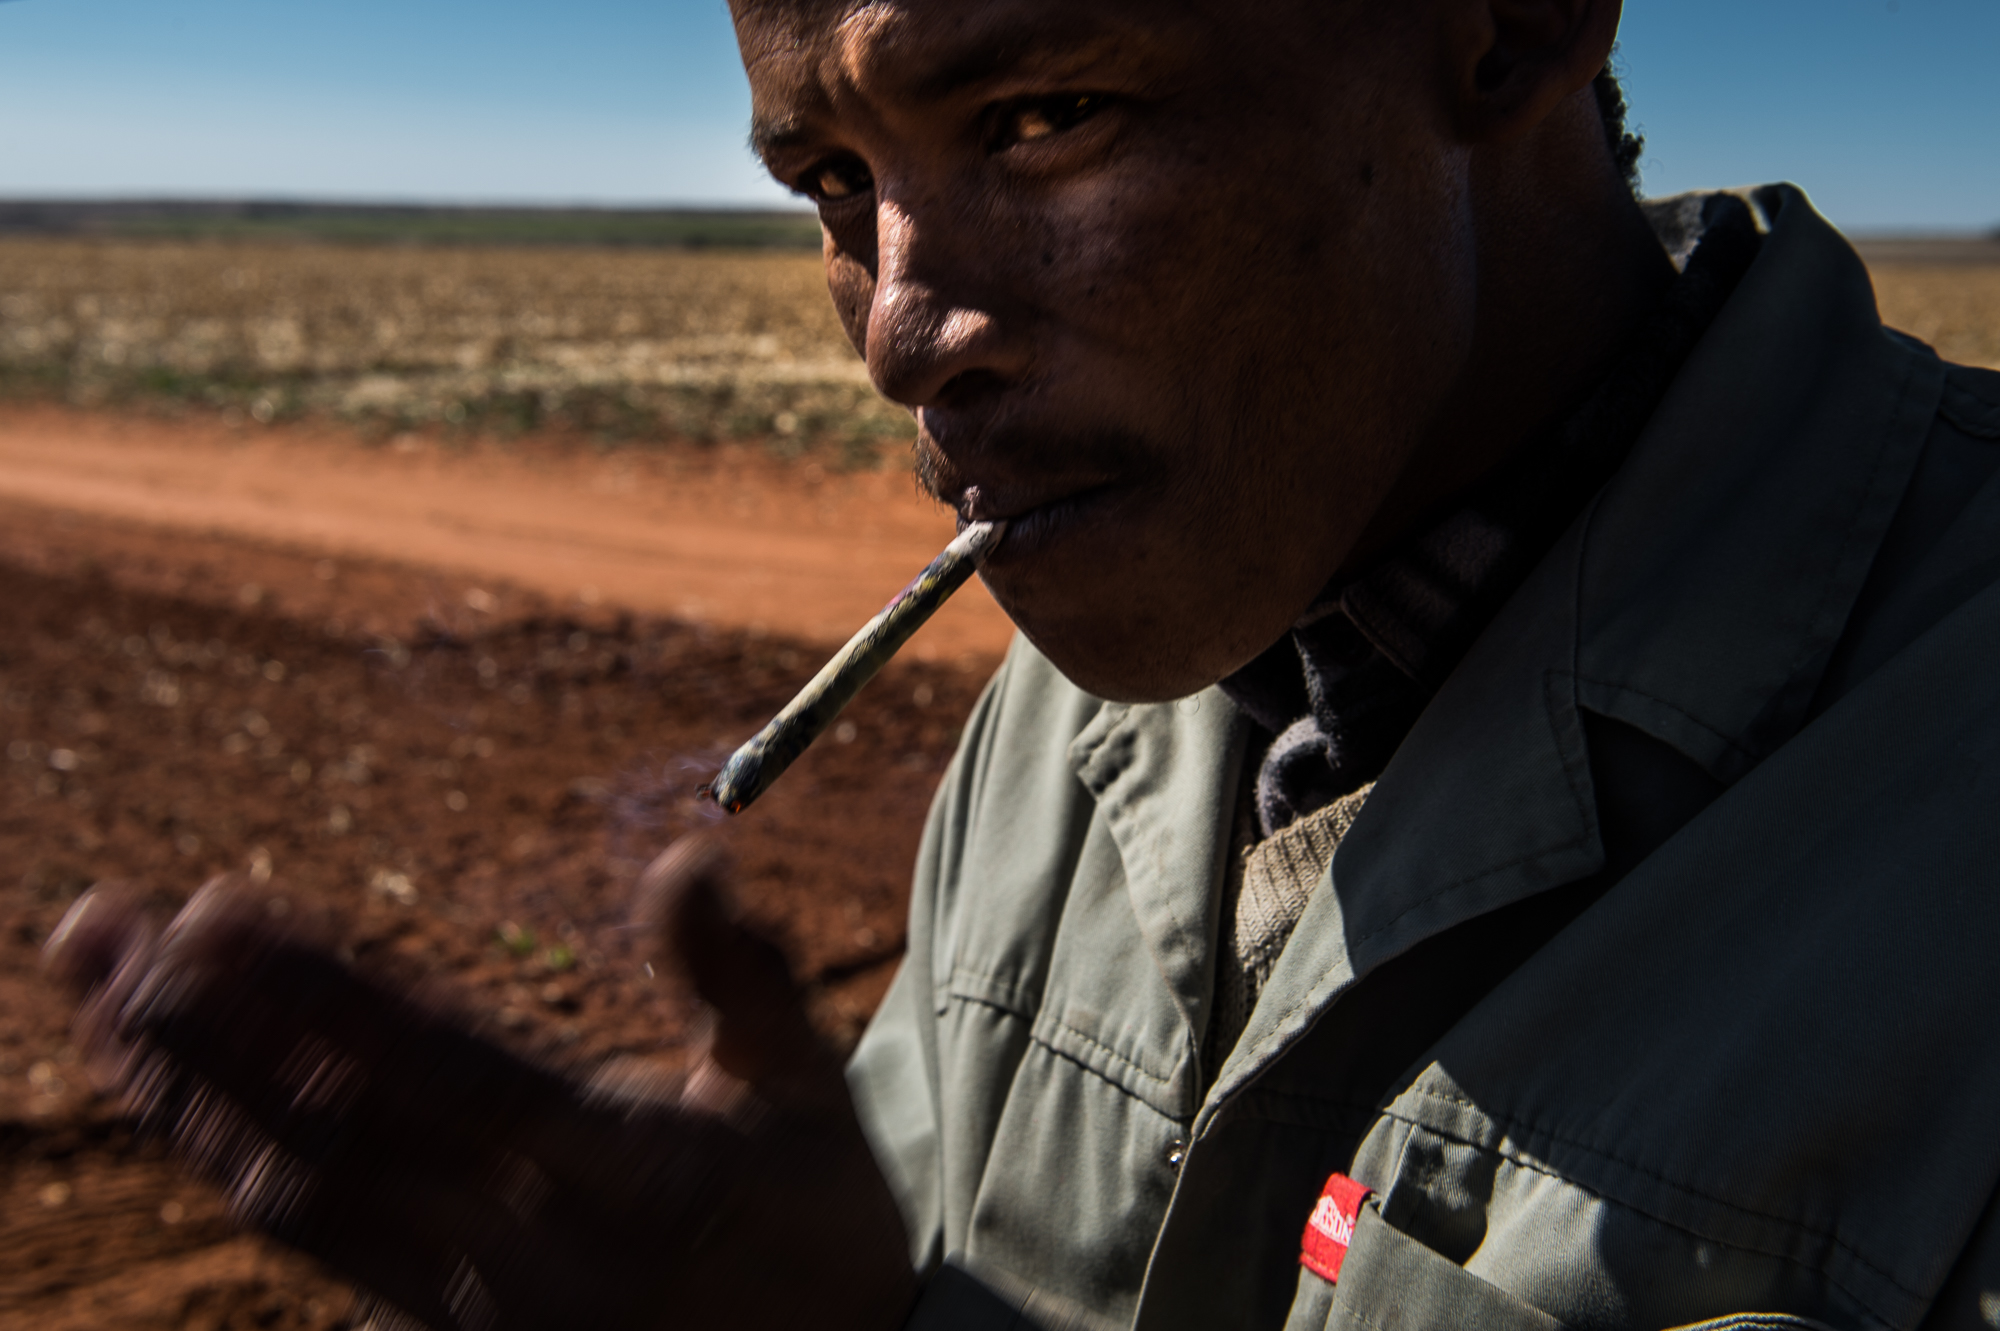  South Africa, Northern Cape, 02.08.2018 // A farmworker smoking during a break of work on the fields. // Lucas Bäuml 